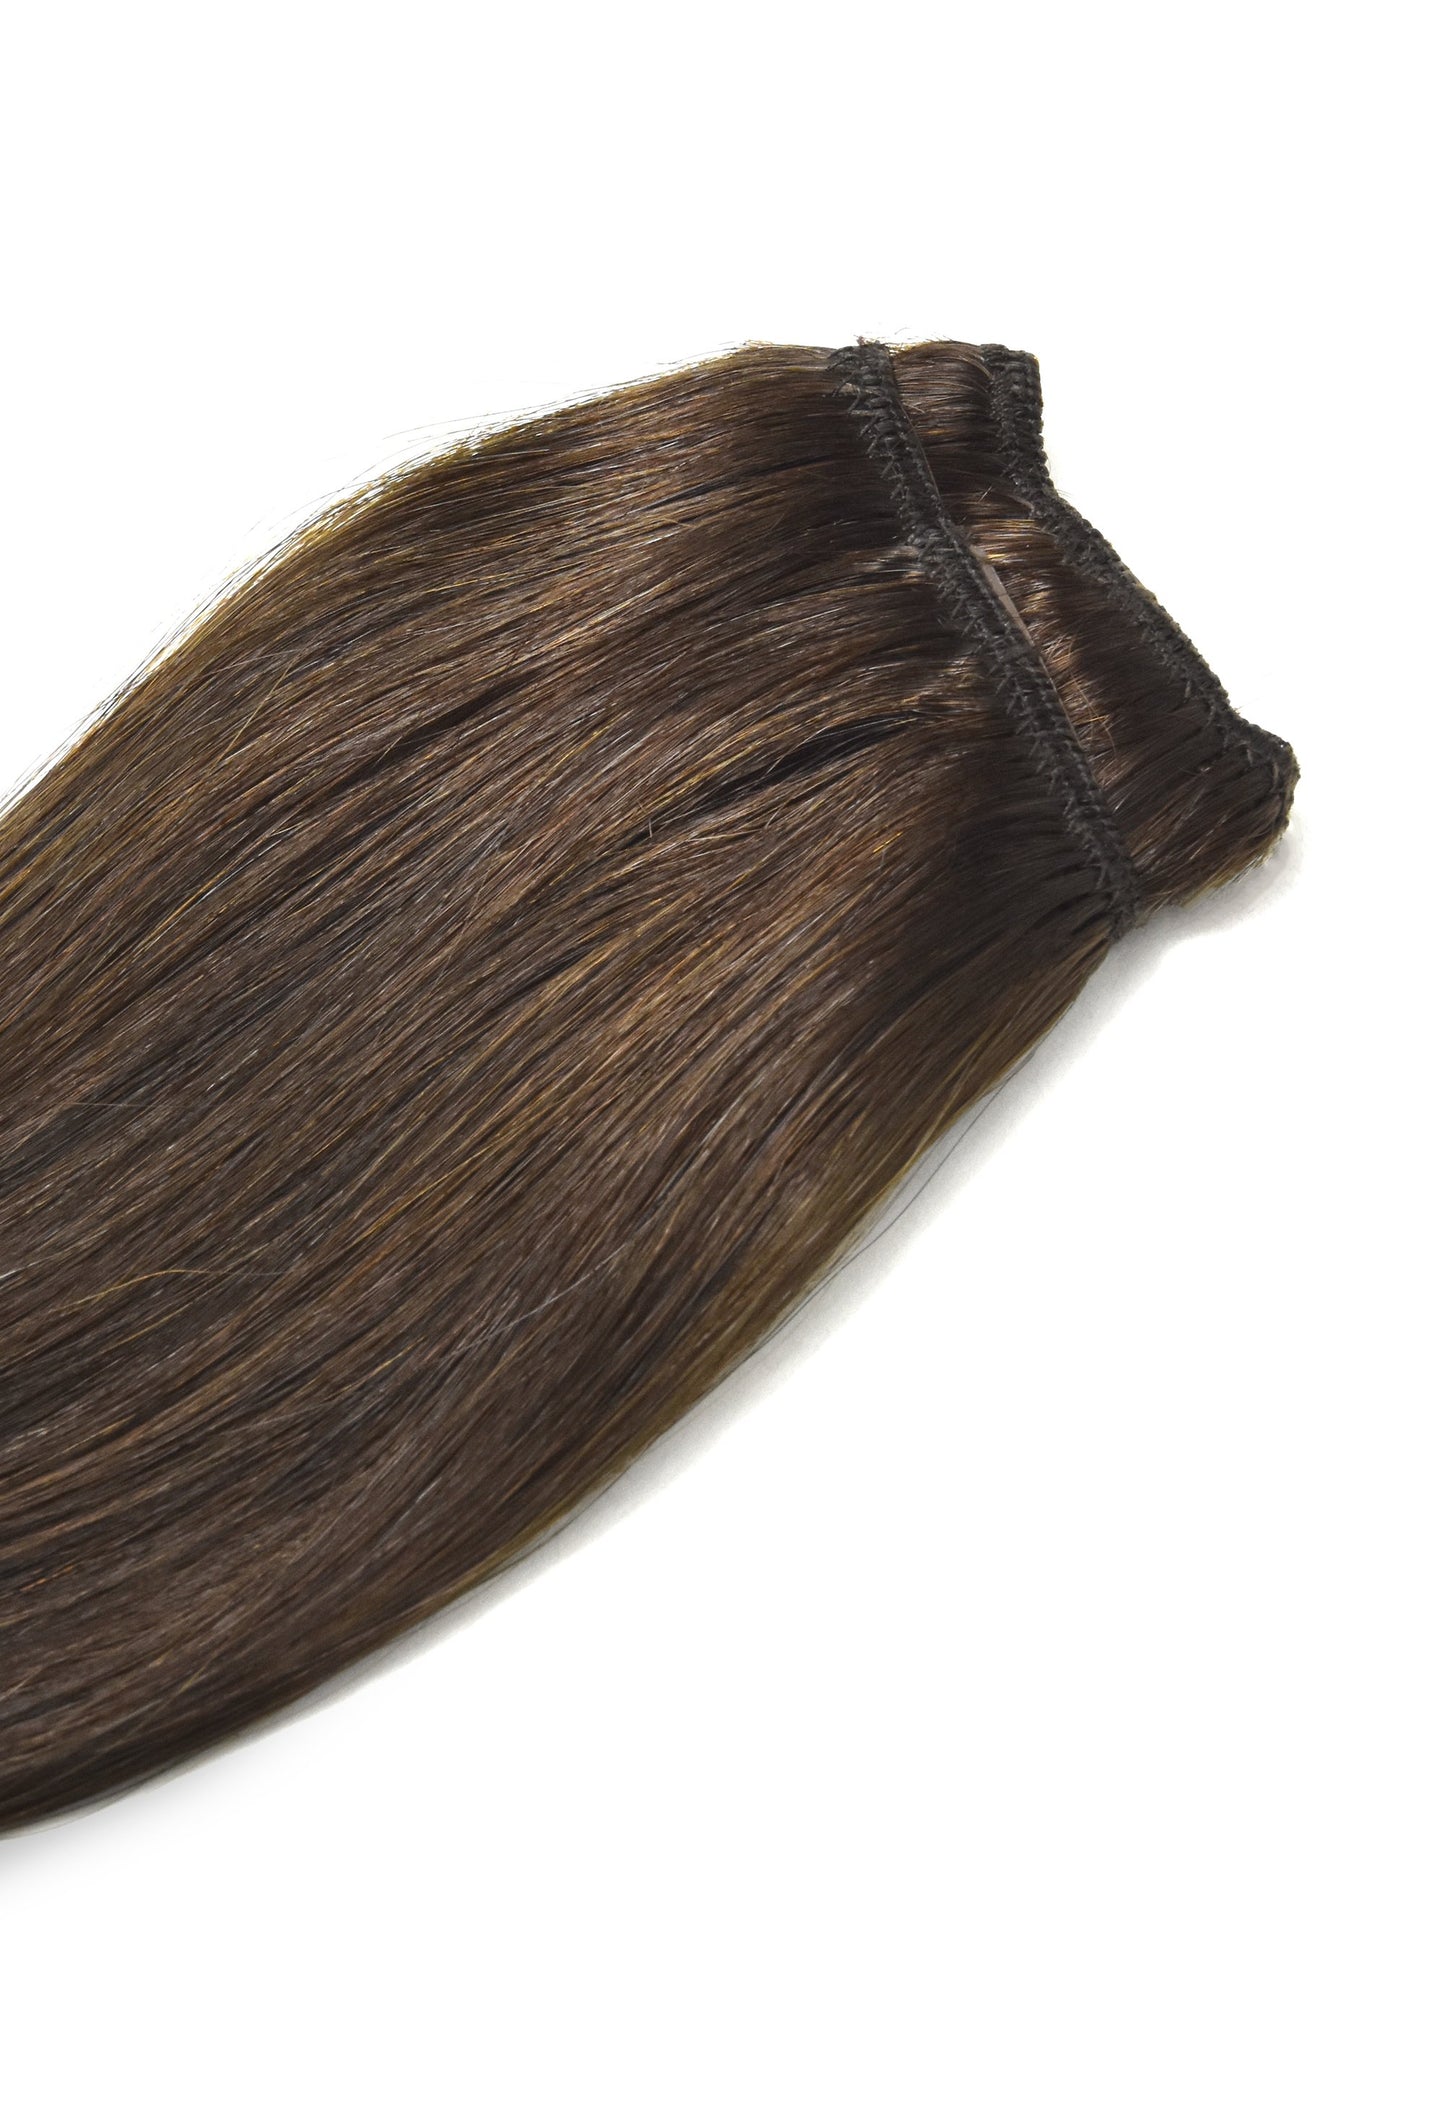 one piece hair extensions clip in hair pieces medium brown shade 4